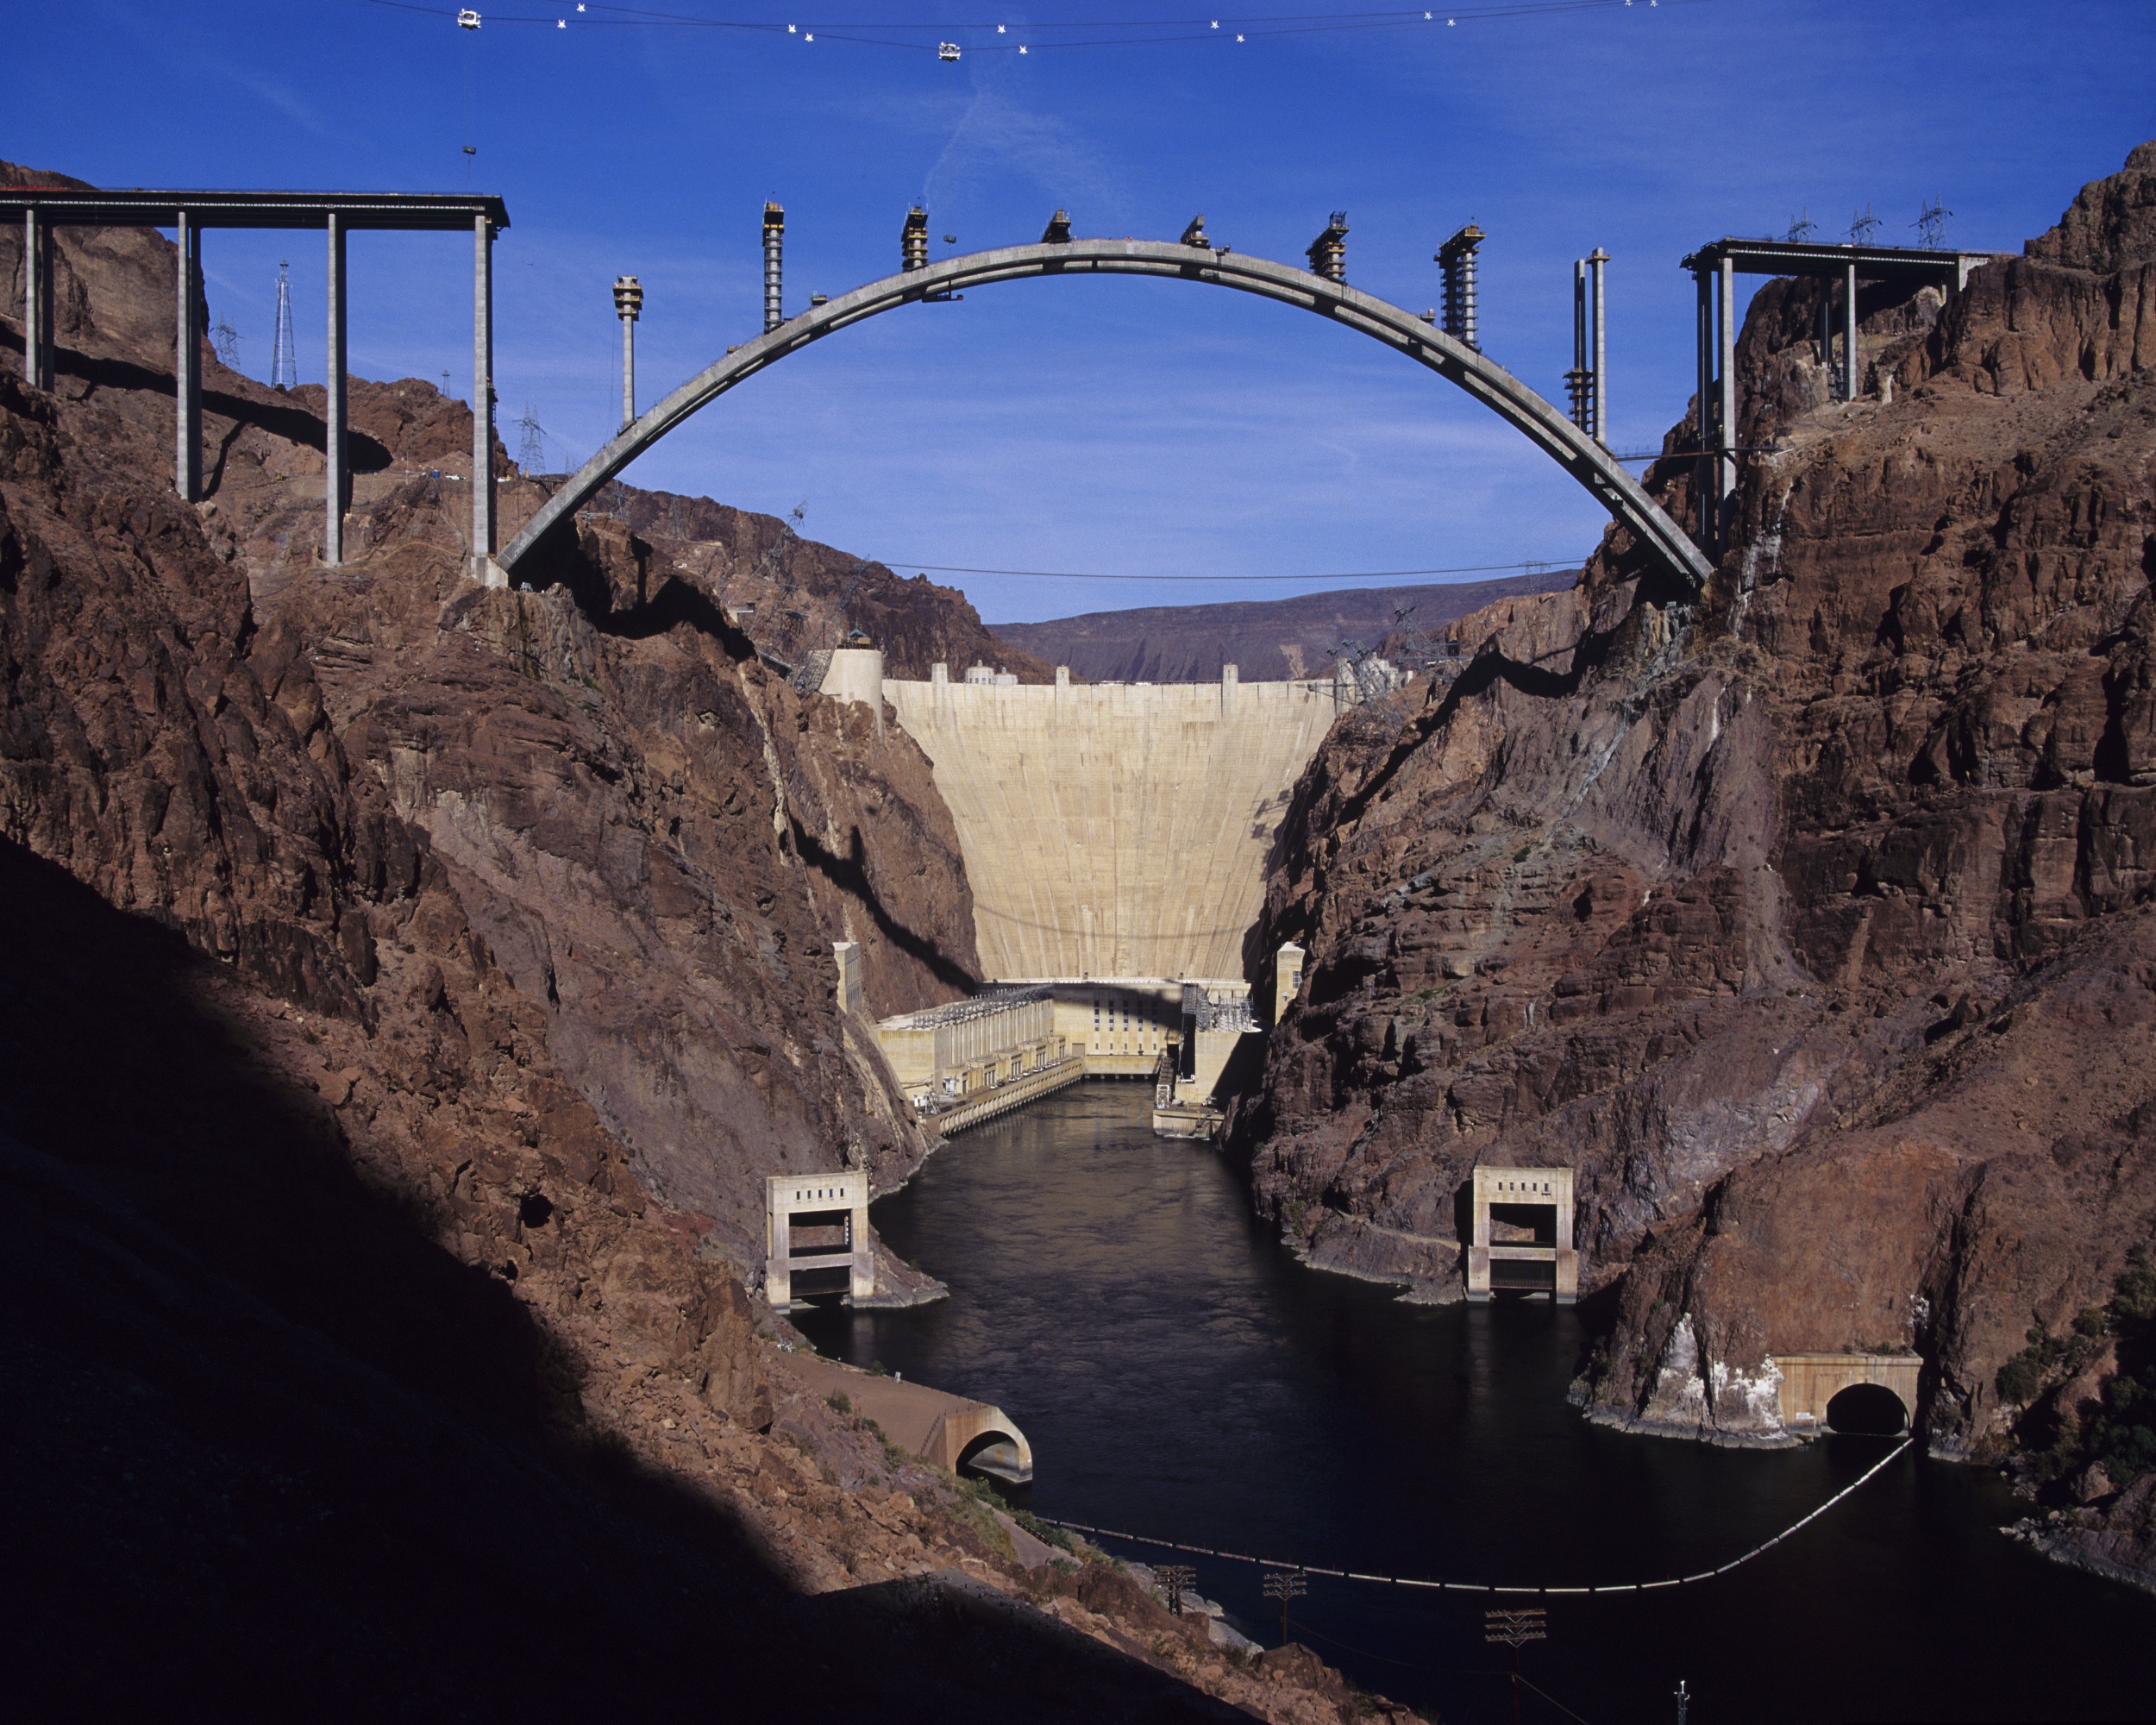 File:Hoover Dam Bypass Bridge - 2009-11.jpg - Wikimedia Commons